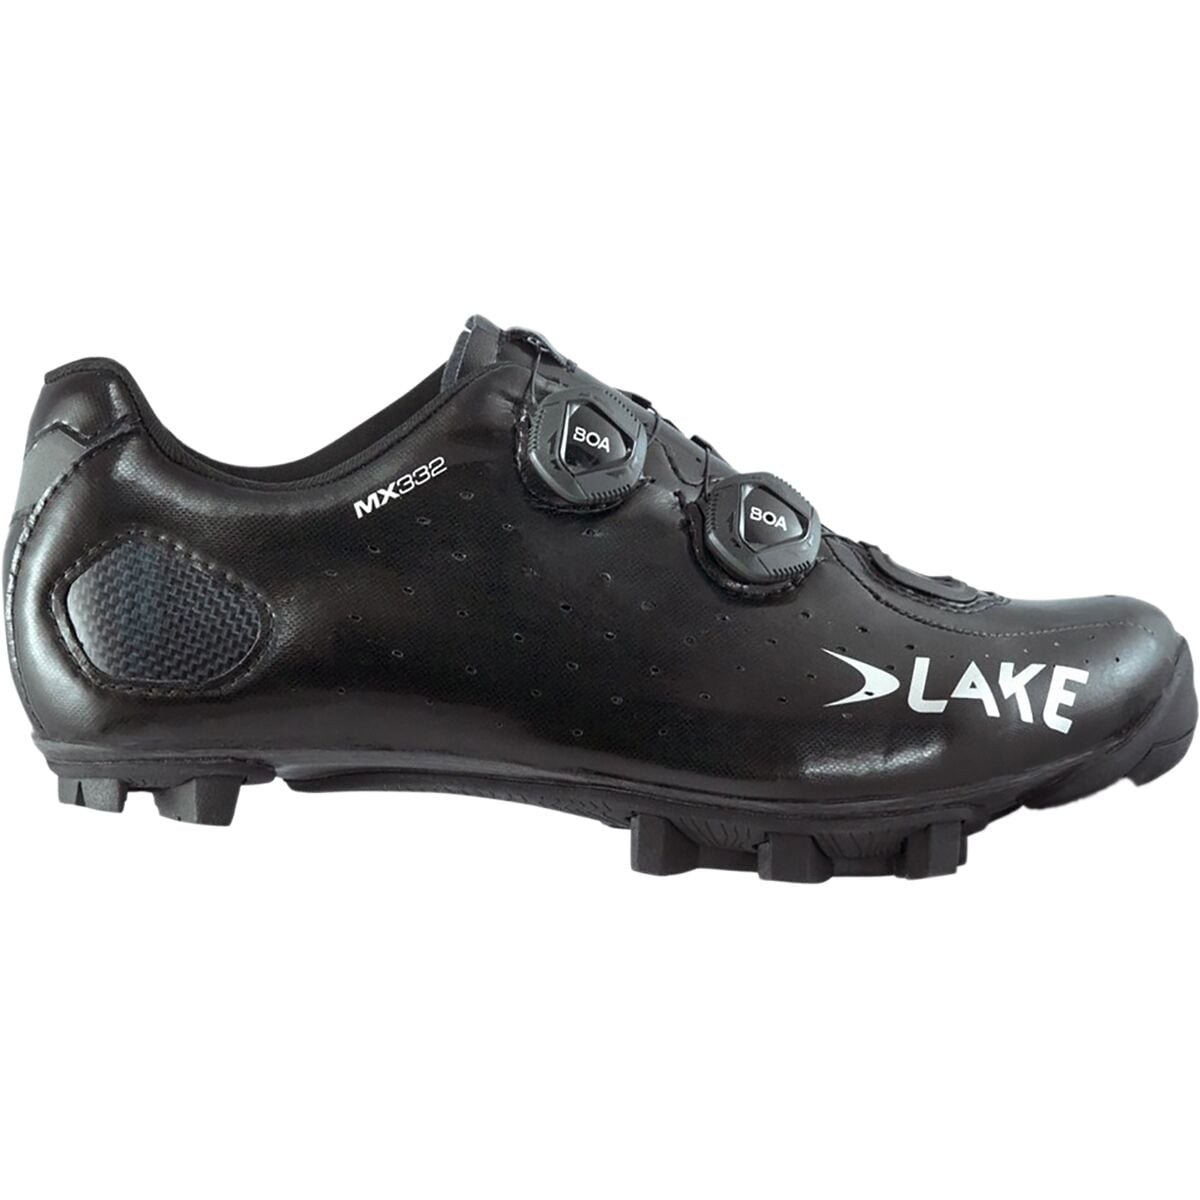 Lake MX332 Clarino Mountain Bike Shoe - Men's Black/Silver Clarino, 45.5